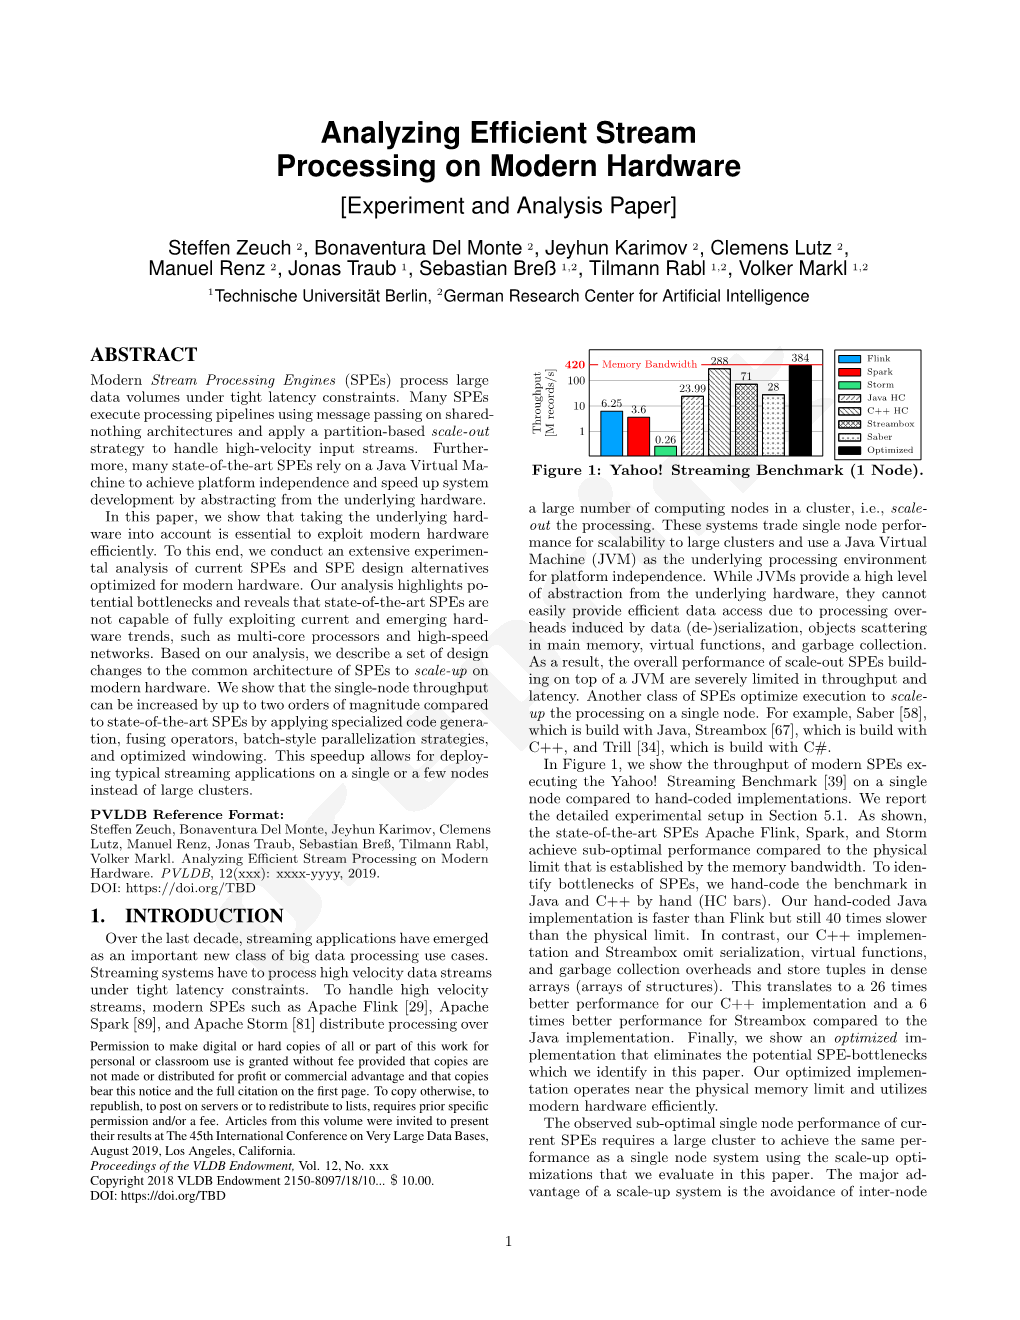 Analyzing Efficient Stream Processing on Modern Hardware